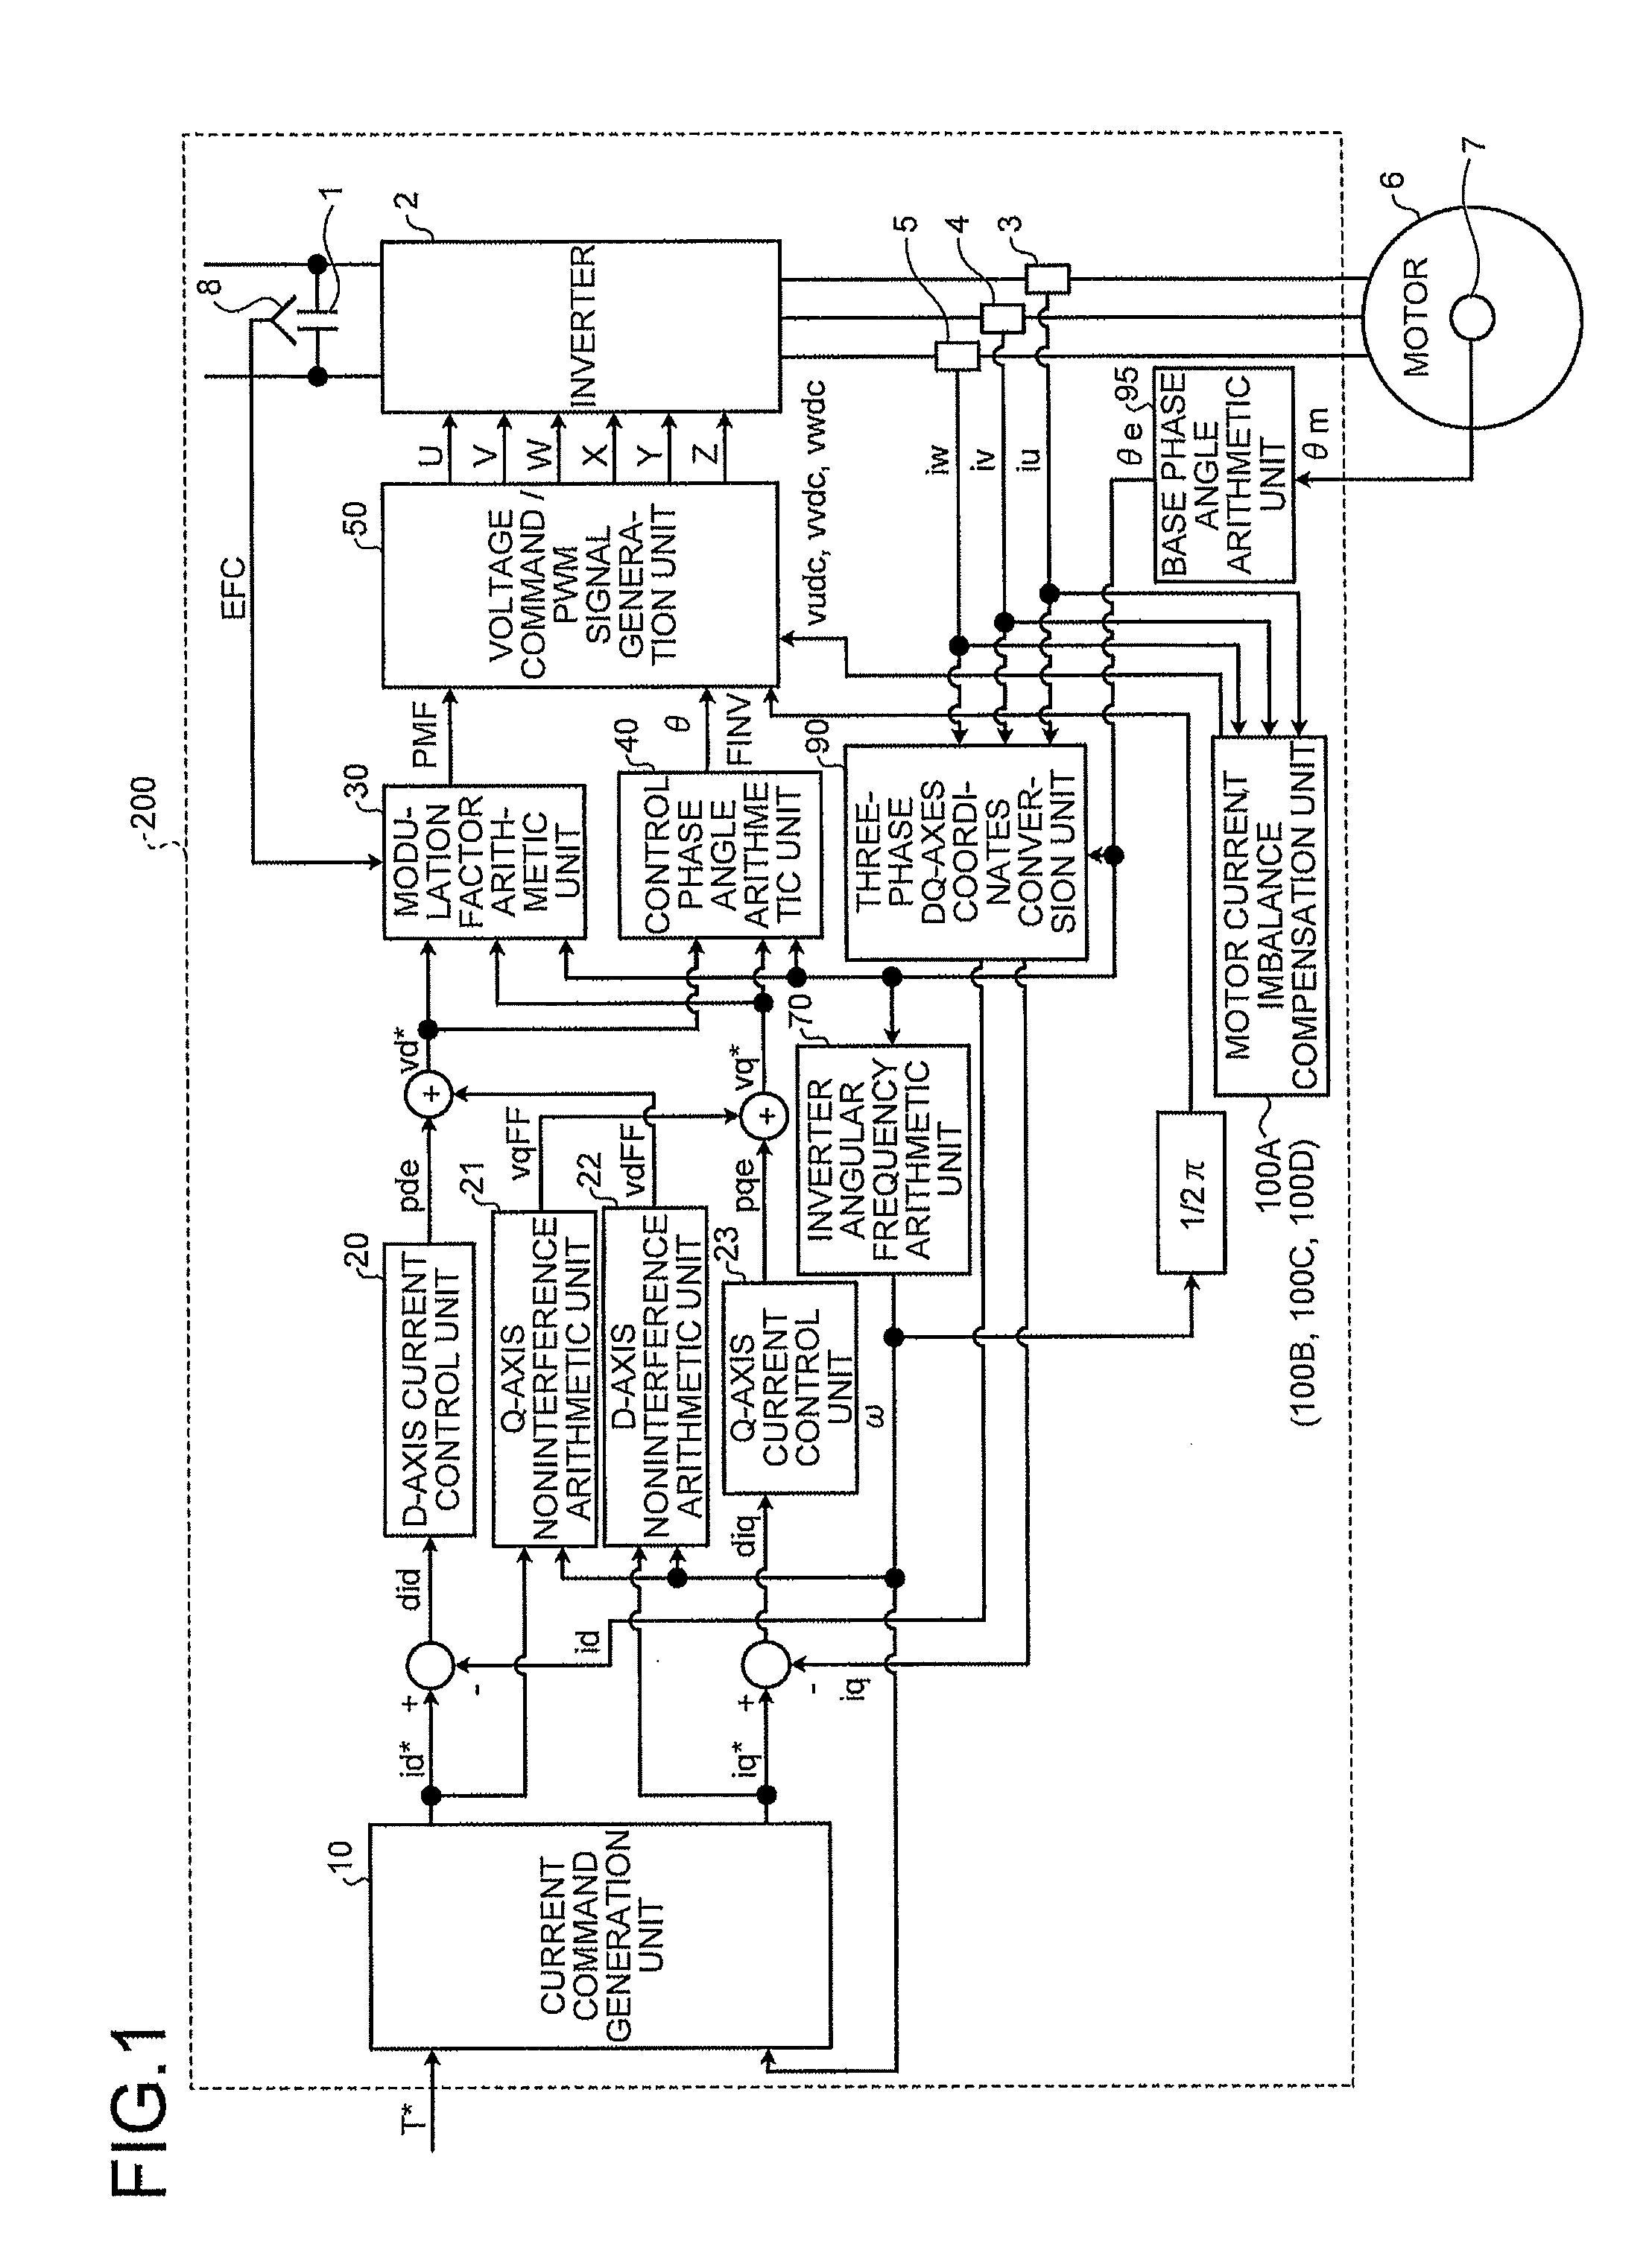 Control apparatus of alternating-current motor